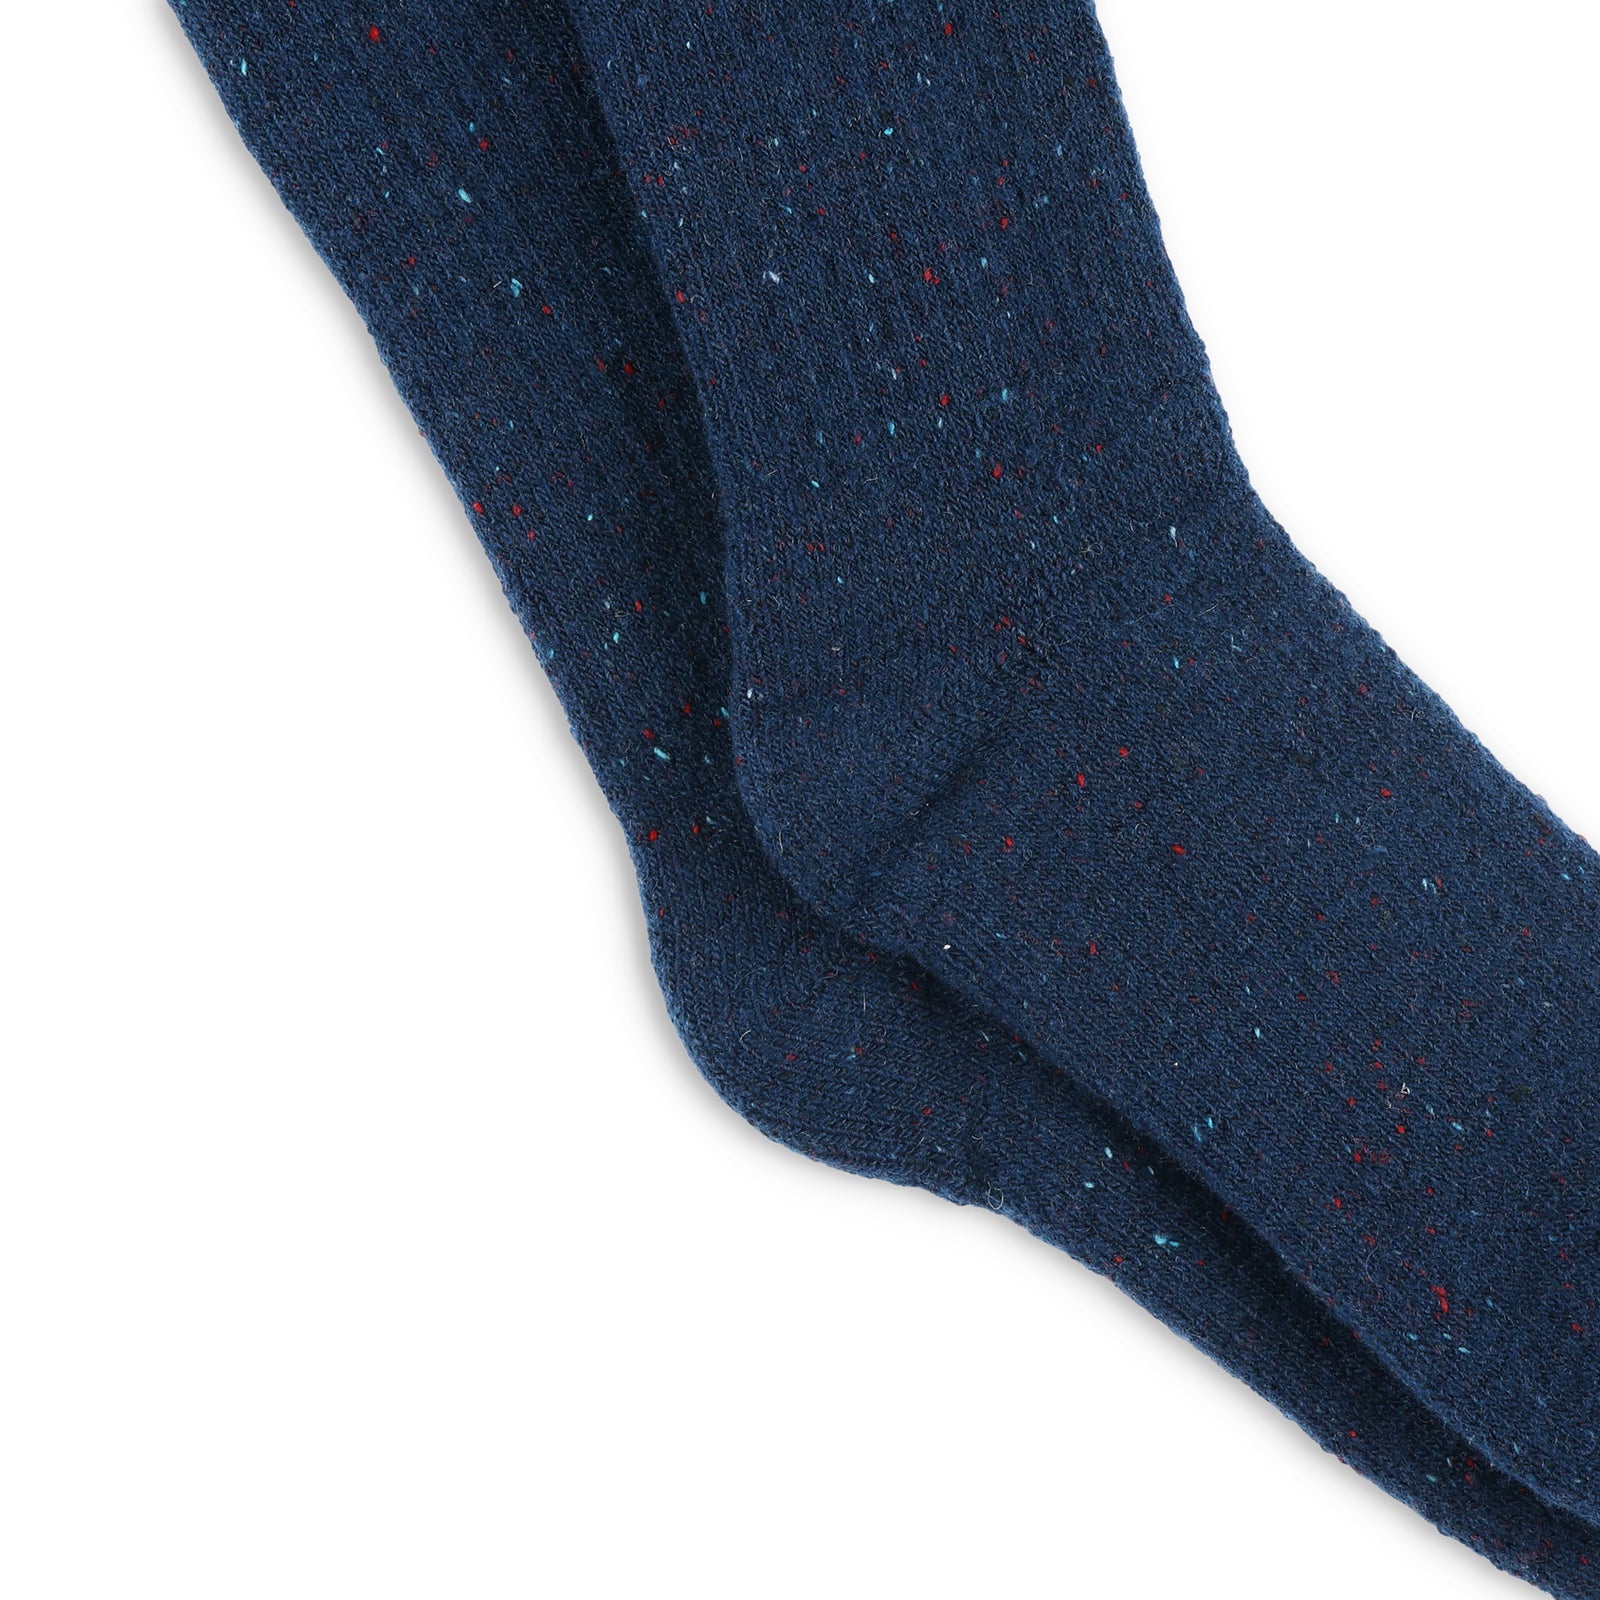 General detail shot of heel on Topo Designs Mountain heavyweight wool blend hiking Socks in "Pond Blue"